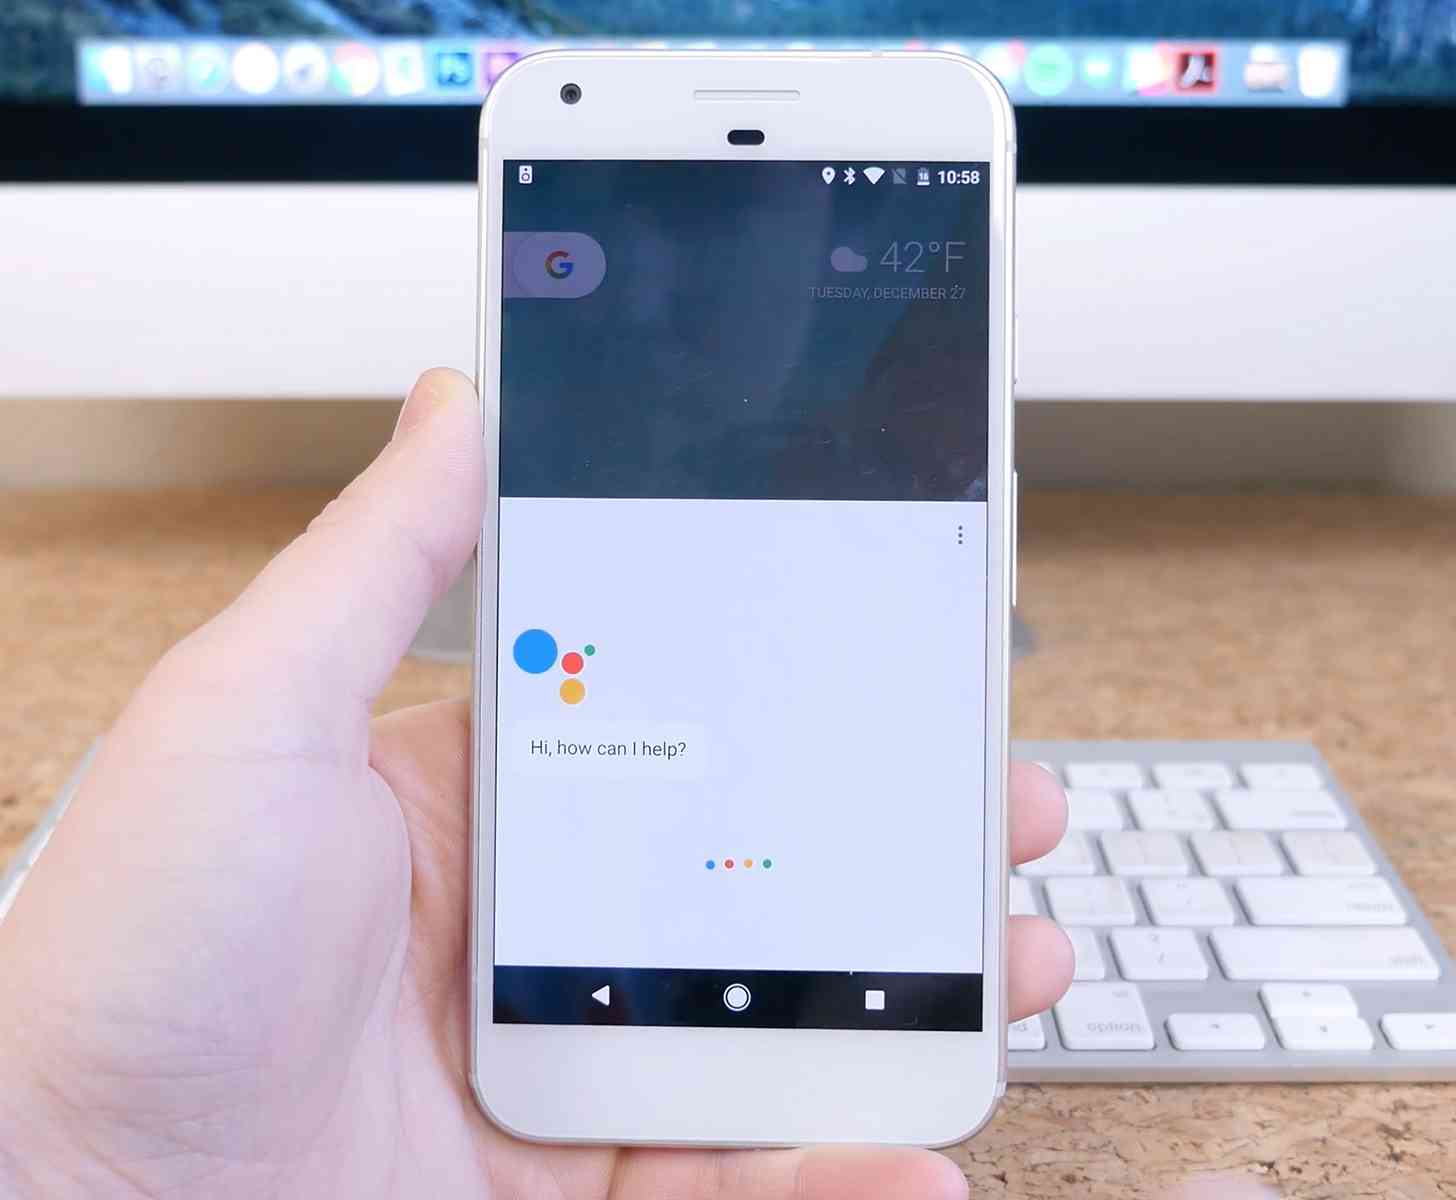 Google Assistant Pixel XL hands-on